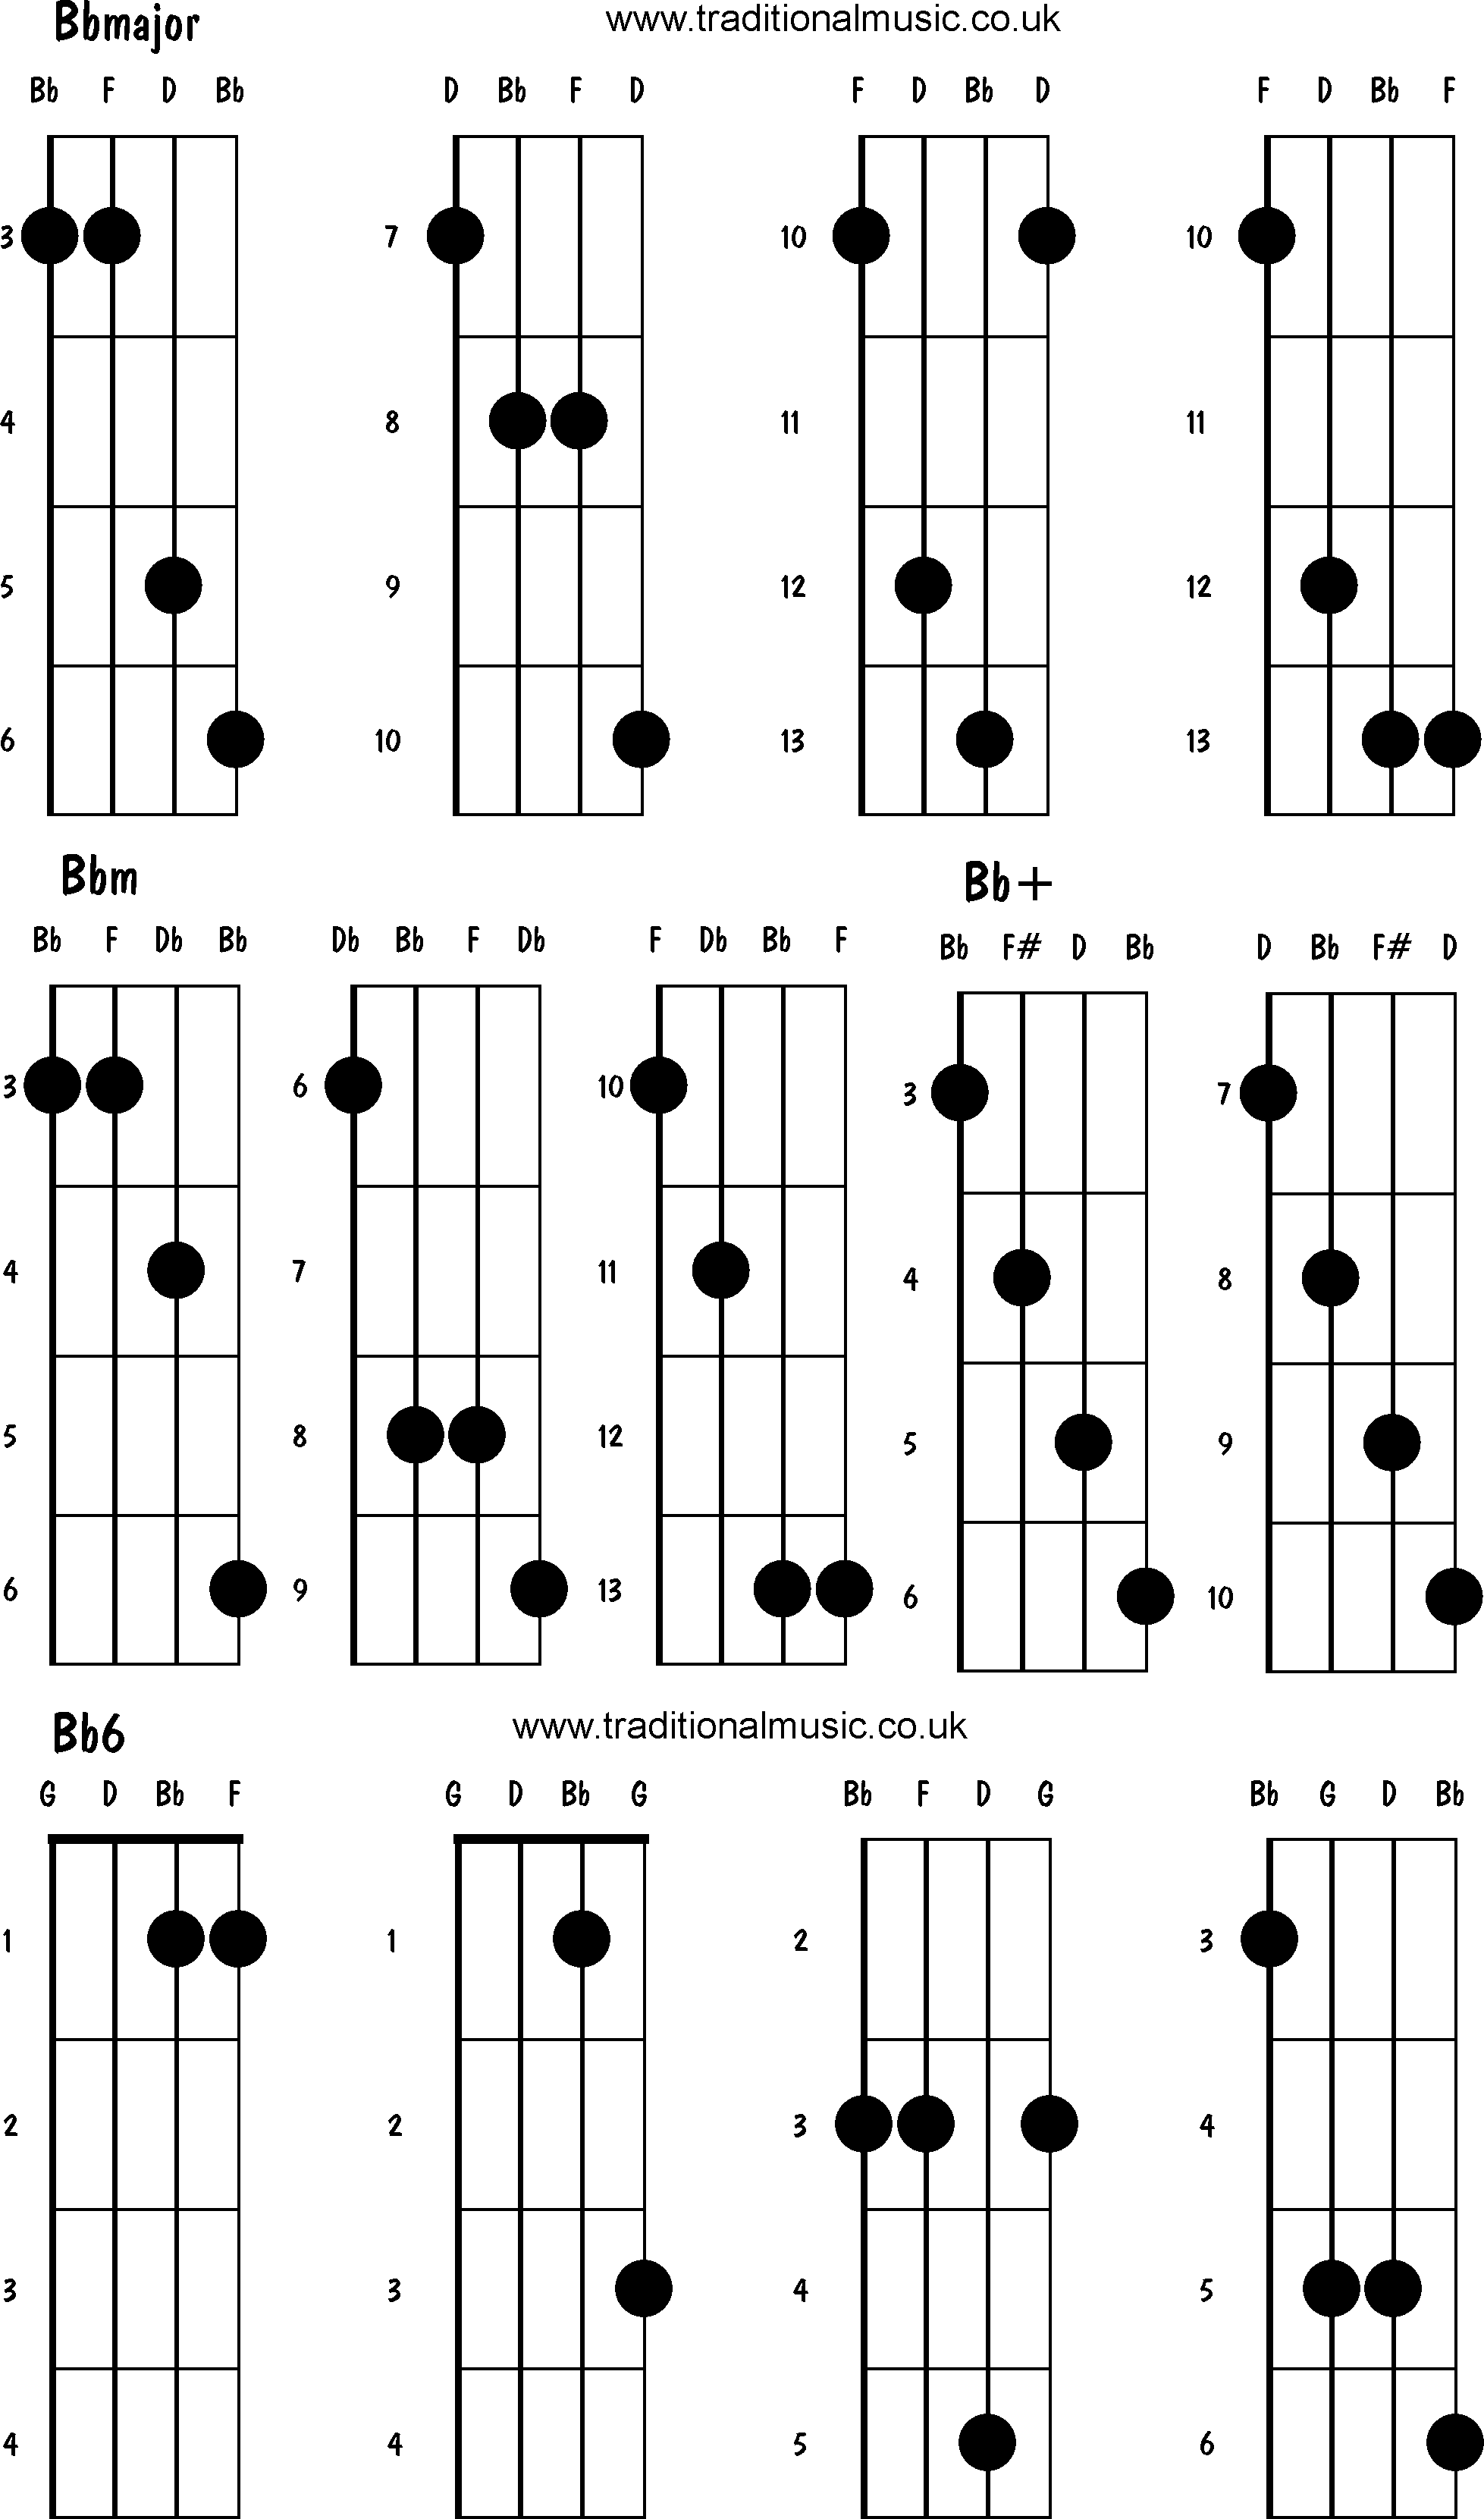 Advanced mandolin chords:Bbmajor, Bbm, Bb+, Bb6